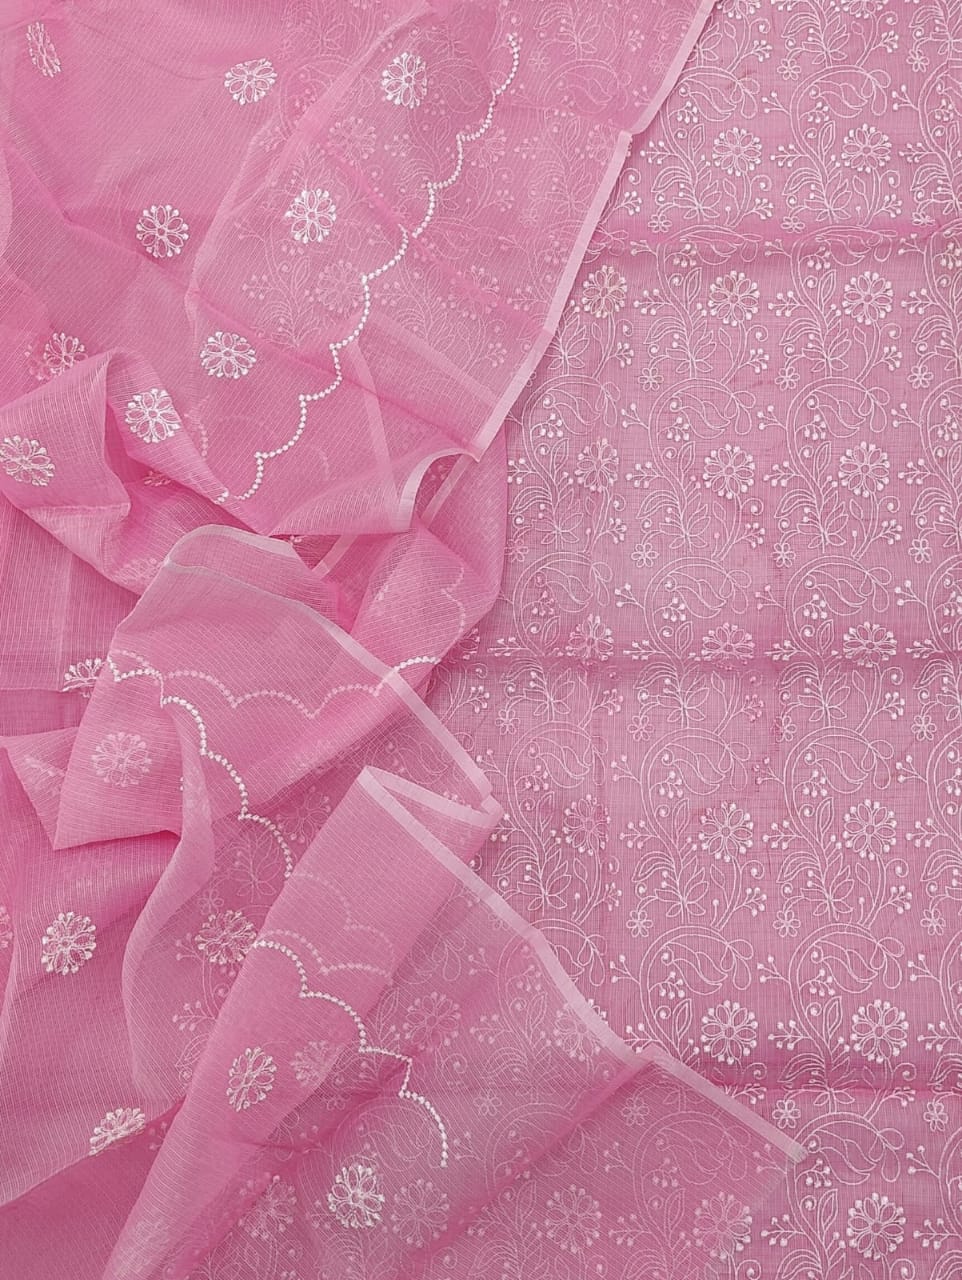 Kota Doria Embroidery Work Suits Puce Pink Colour Top+Bottom+Dupatta